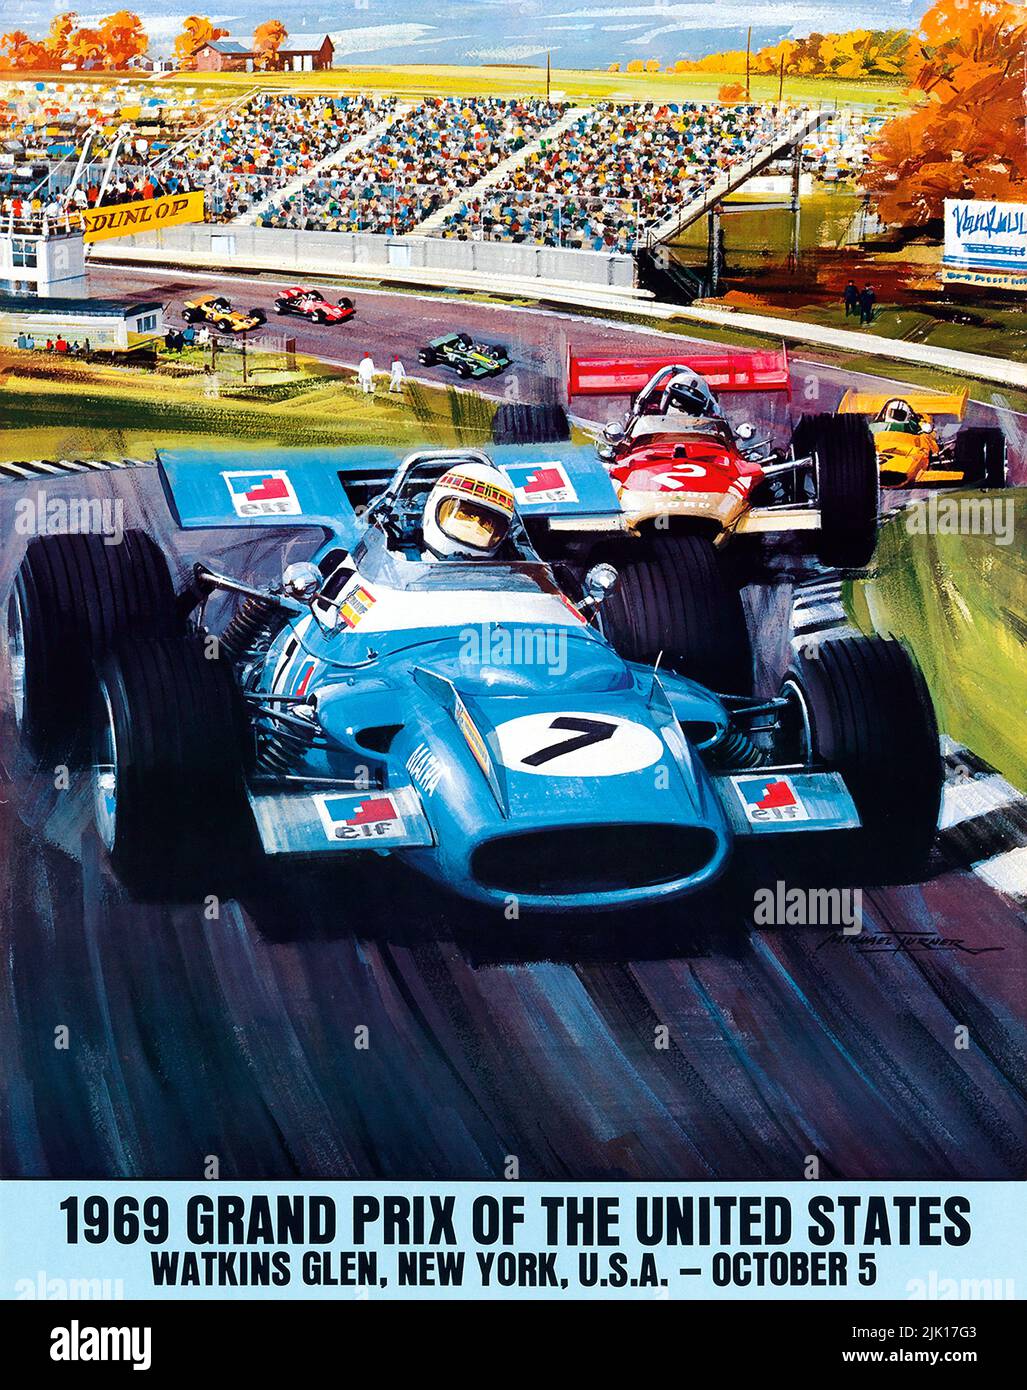 Vintage Race Poster - 1969 United States Grand Prix Stock Photo